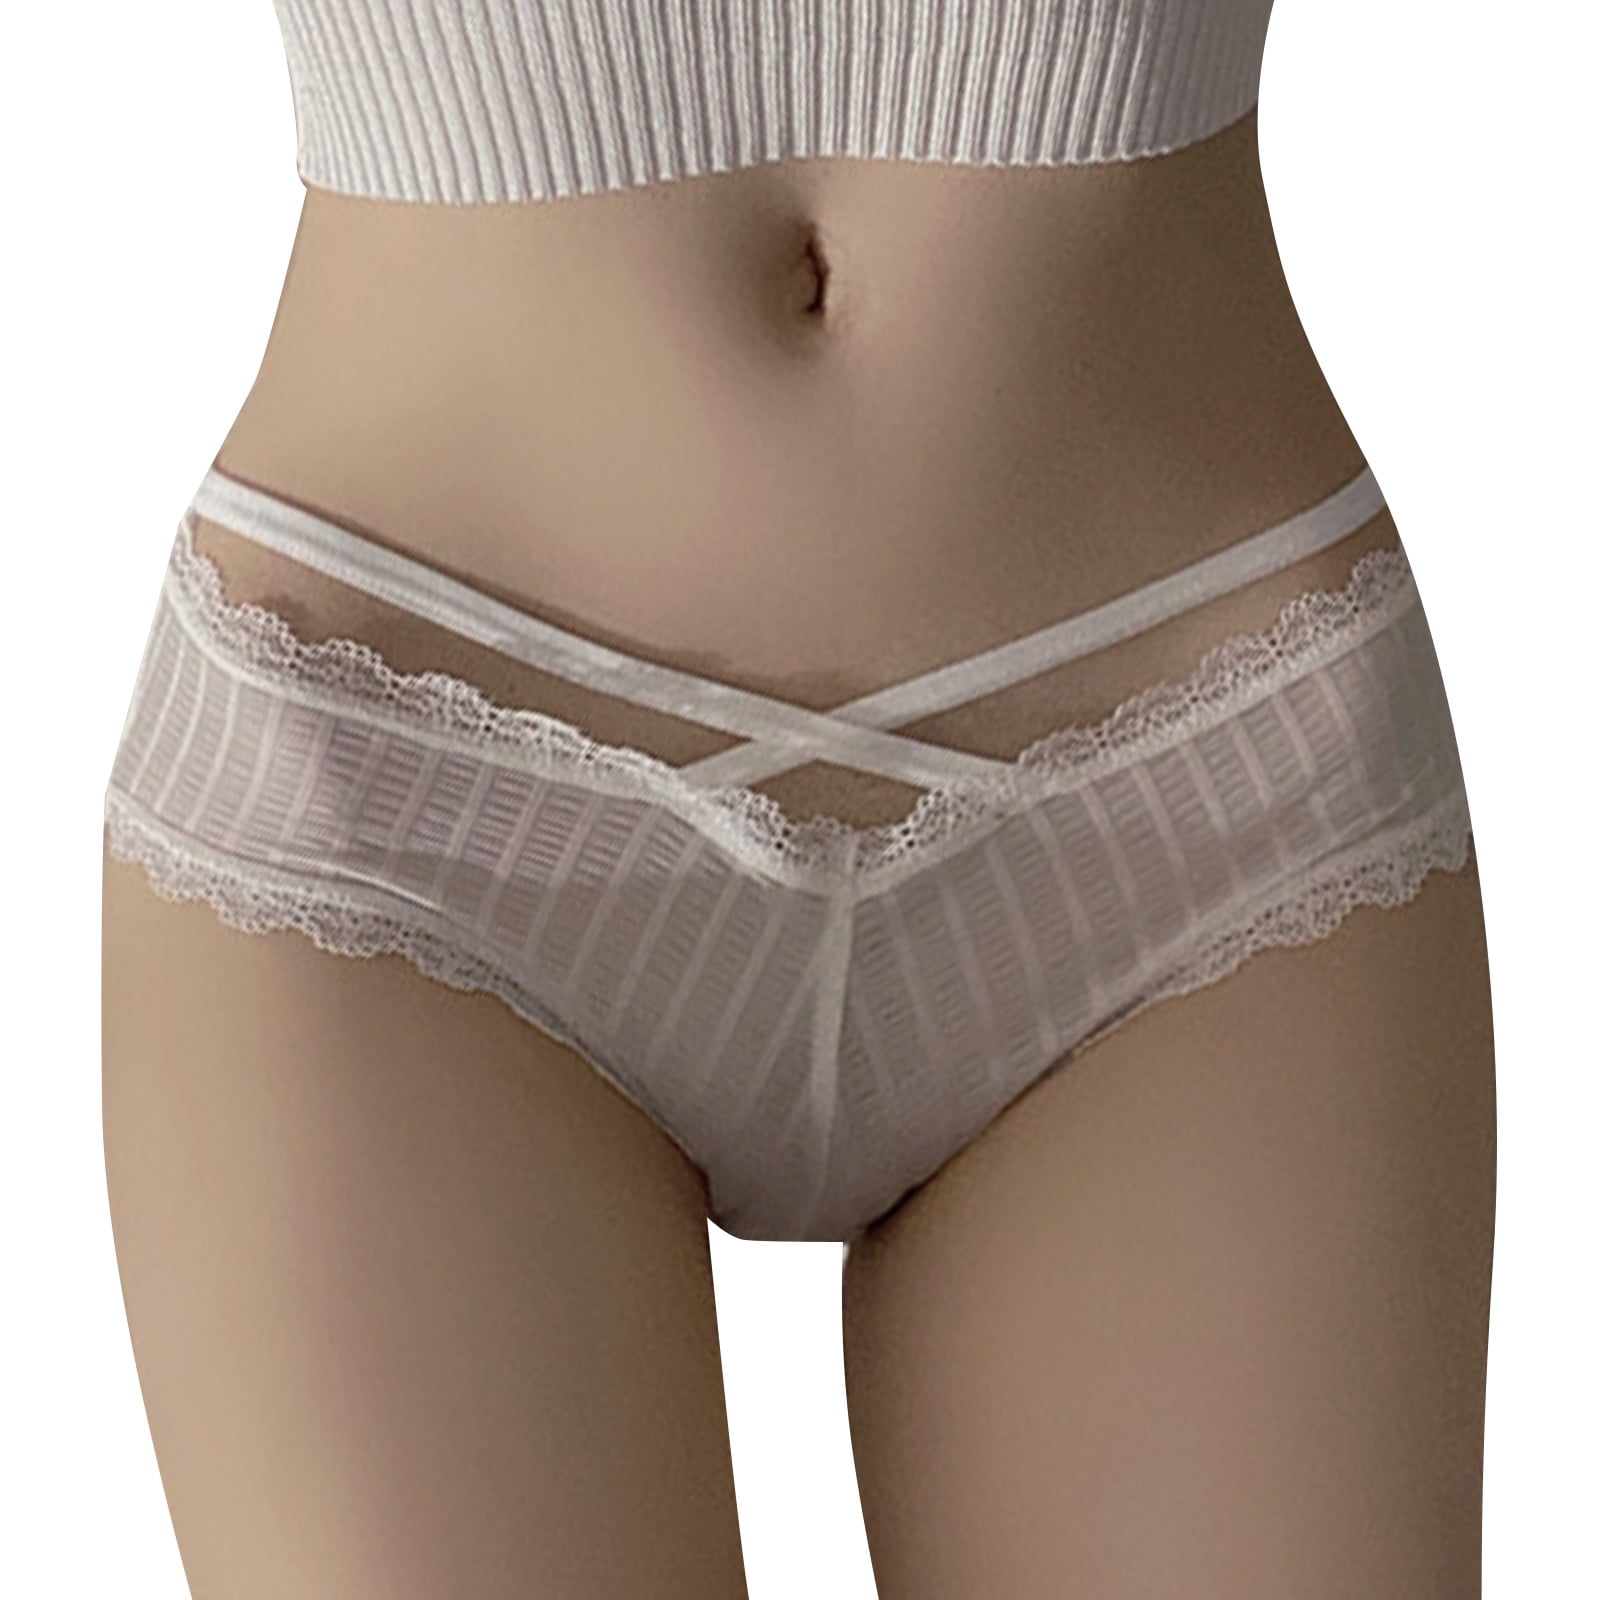 NRUDPQV low waist sexi mature girls tight ladies size sex lace trim spandex pantys brief underwear for women image